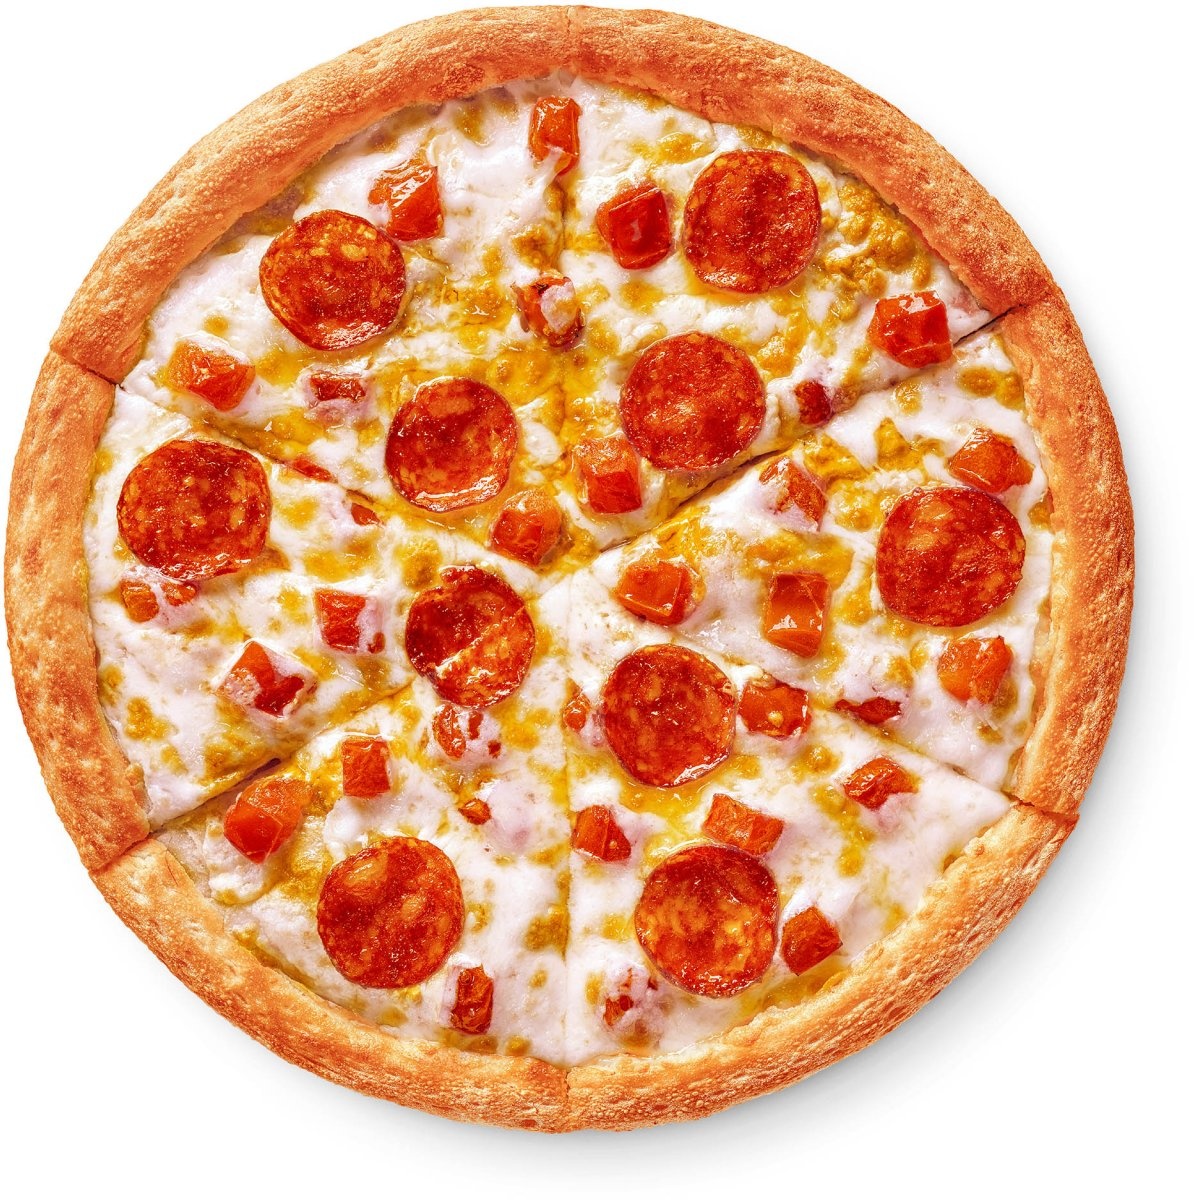 состав пиццы пепперони в додо пицца фото 117